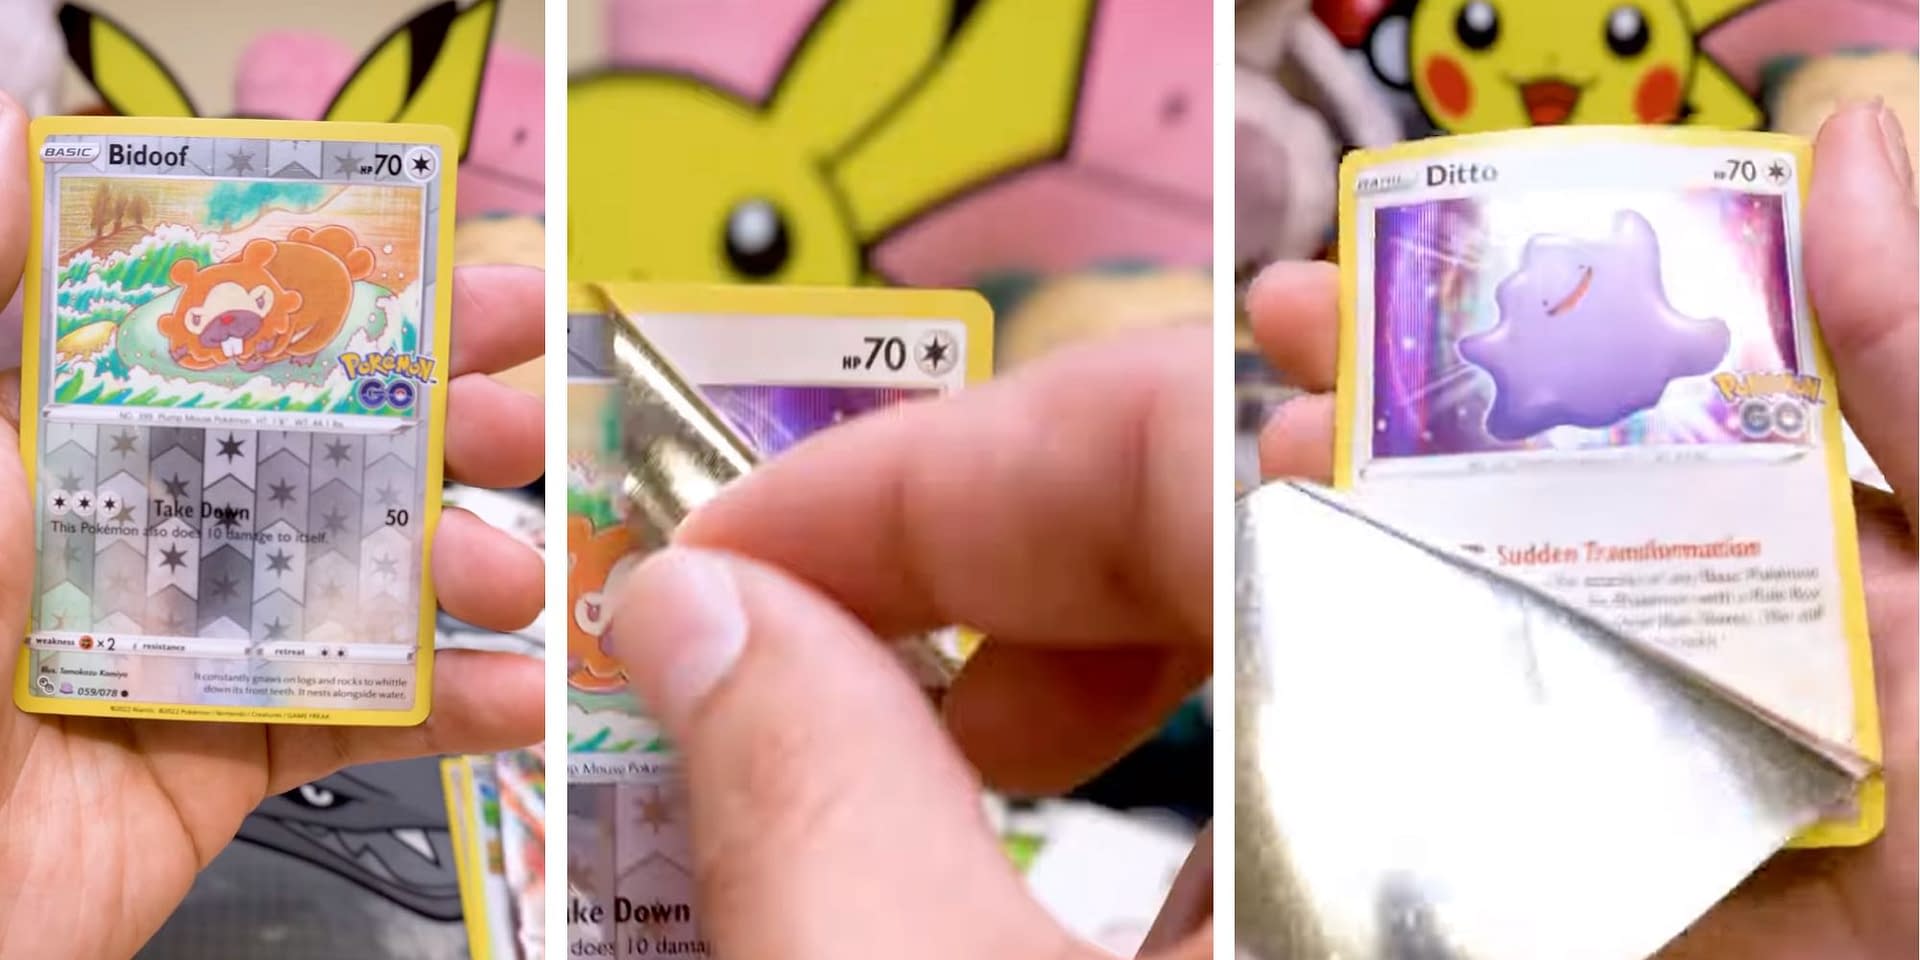 New Pokemon GO Cards Revealed, Peelable Ditto Card Showcased, PokeGuardian